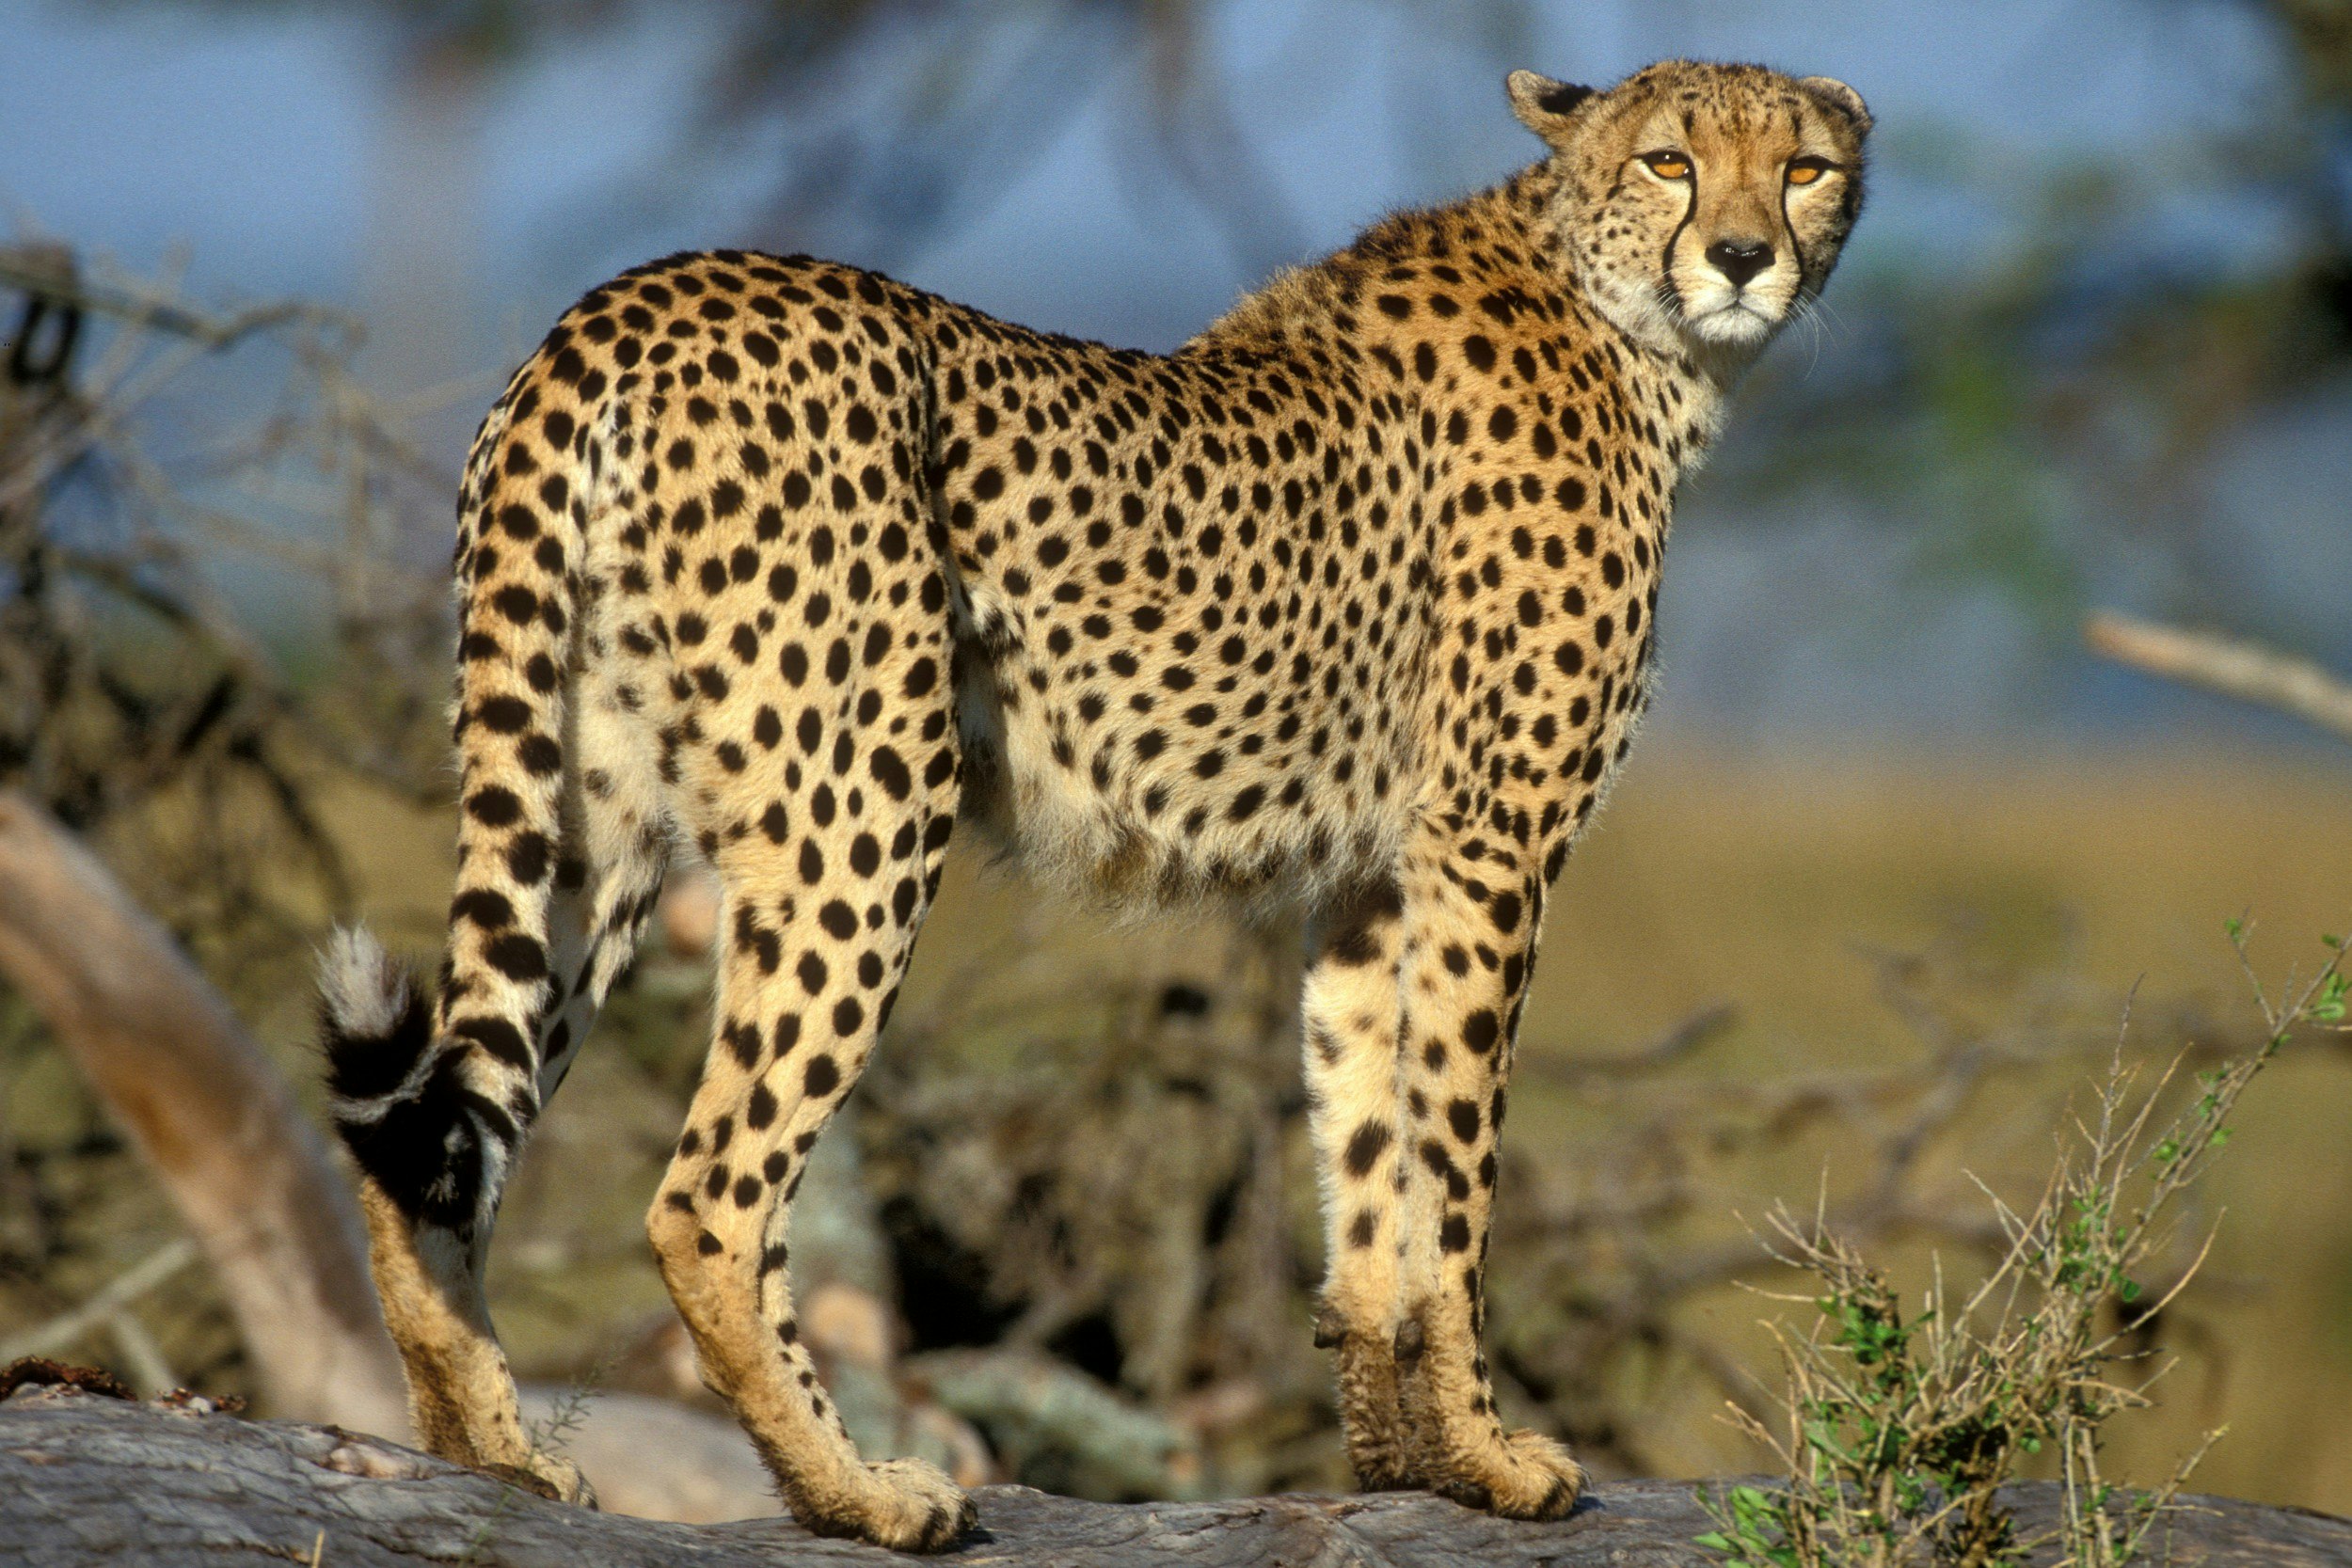 A cheetah in Masai Mara National Reserve, Kenya 